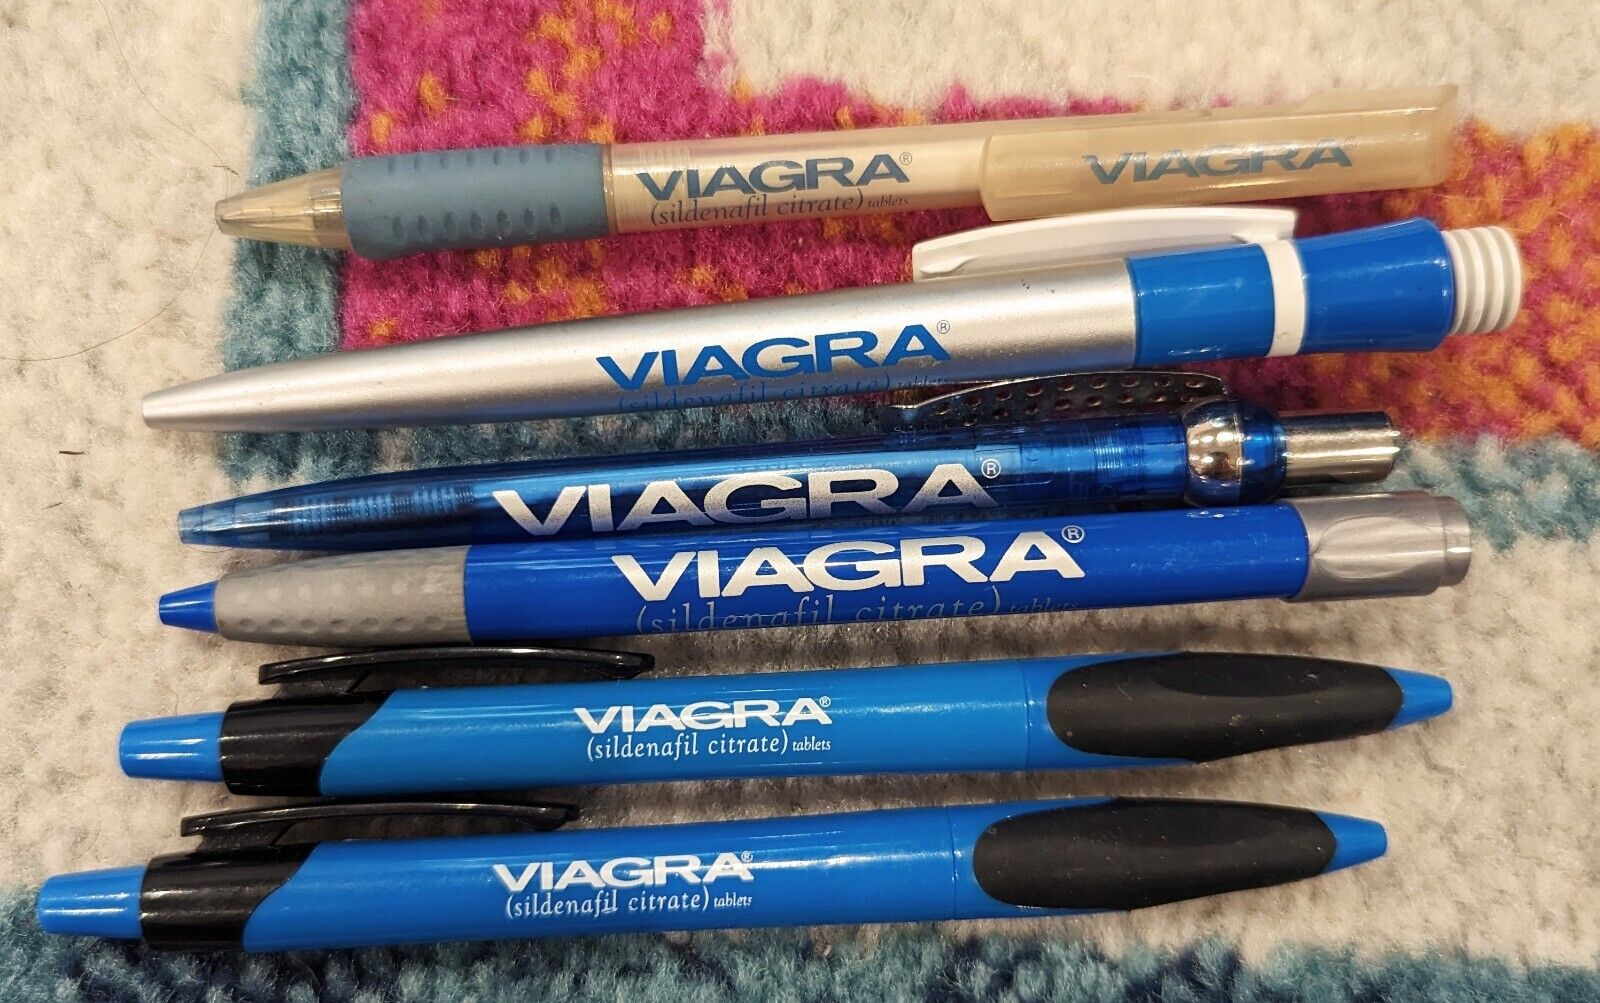 Viagra Pen Assortment Bundle